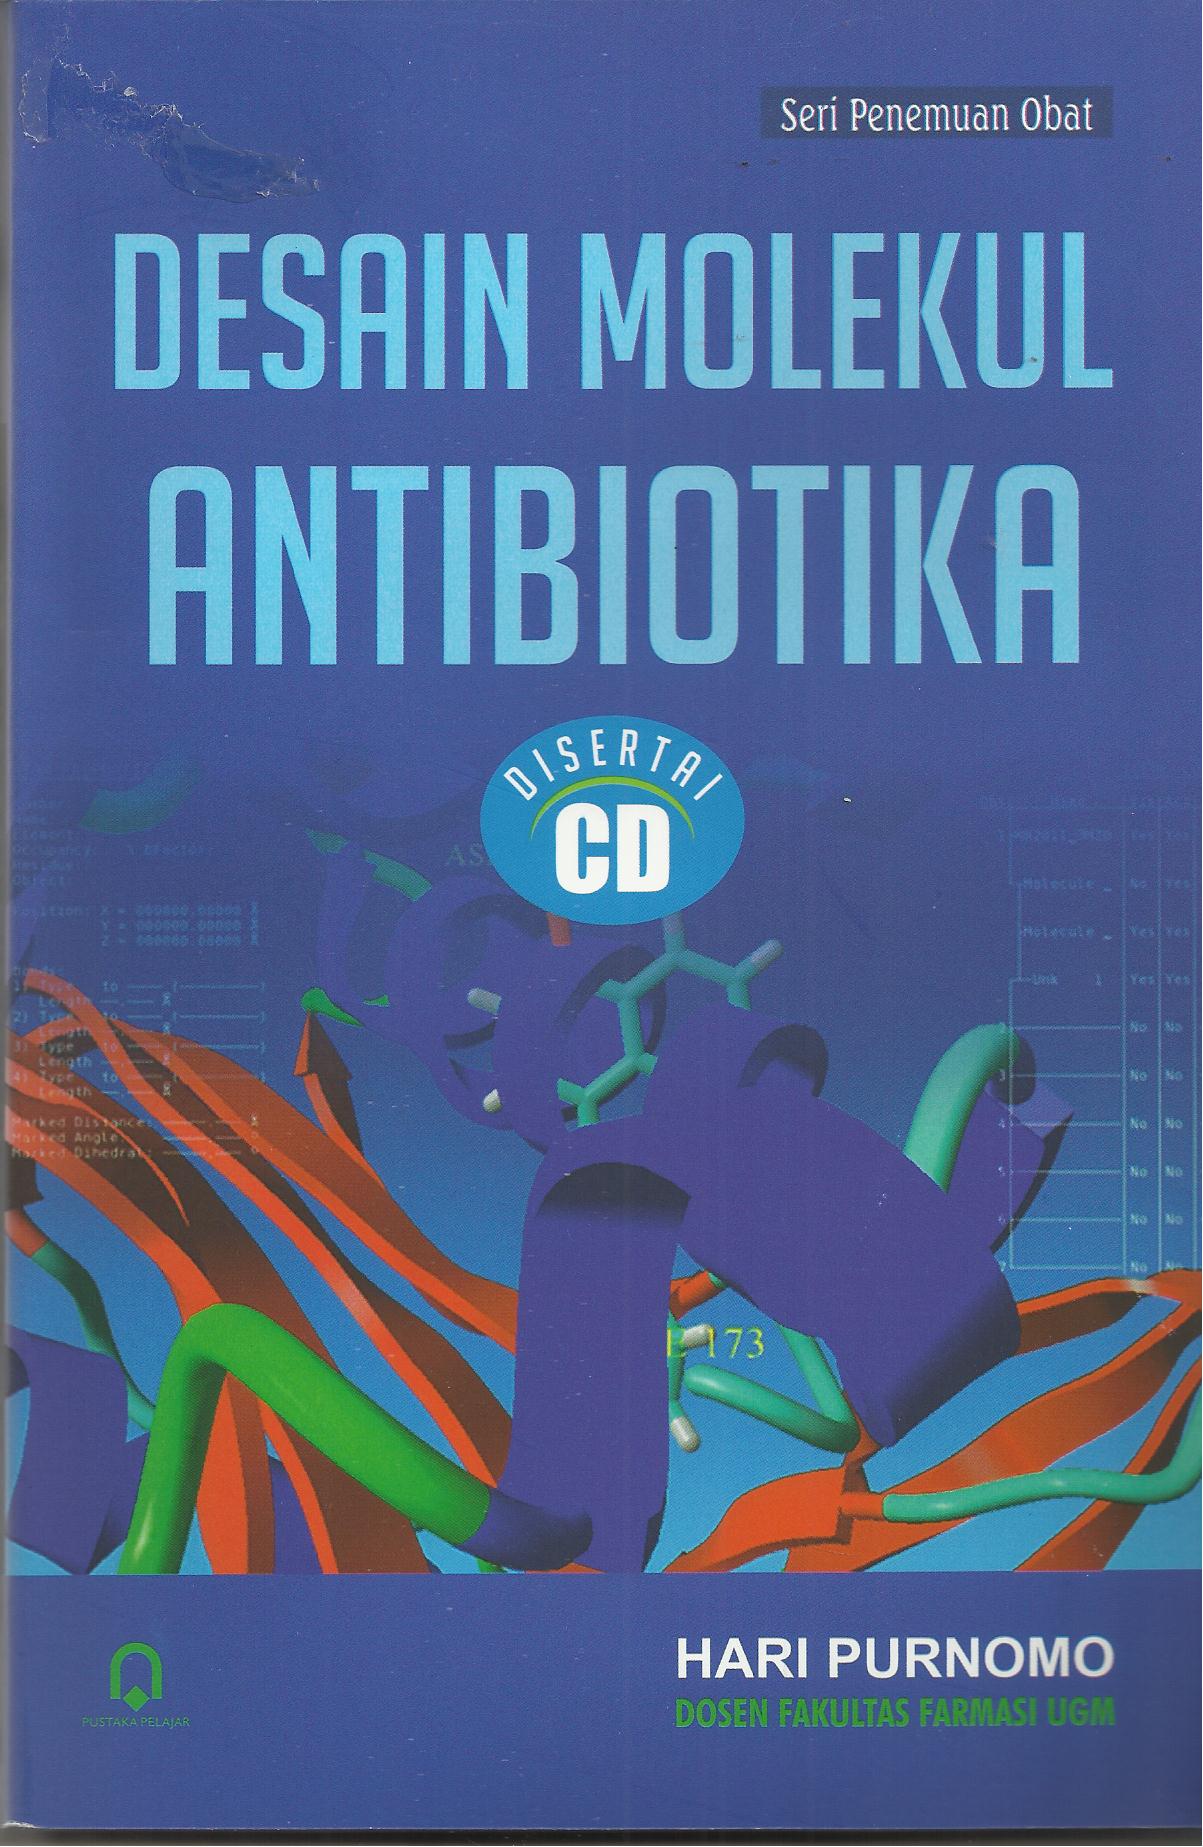 Desain Molekul Antibiotika